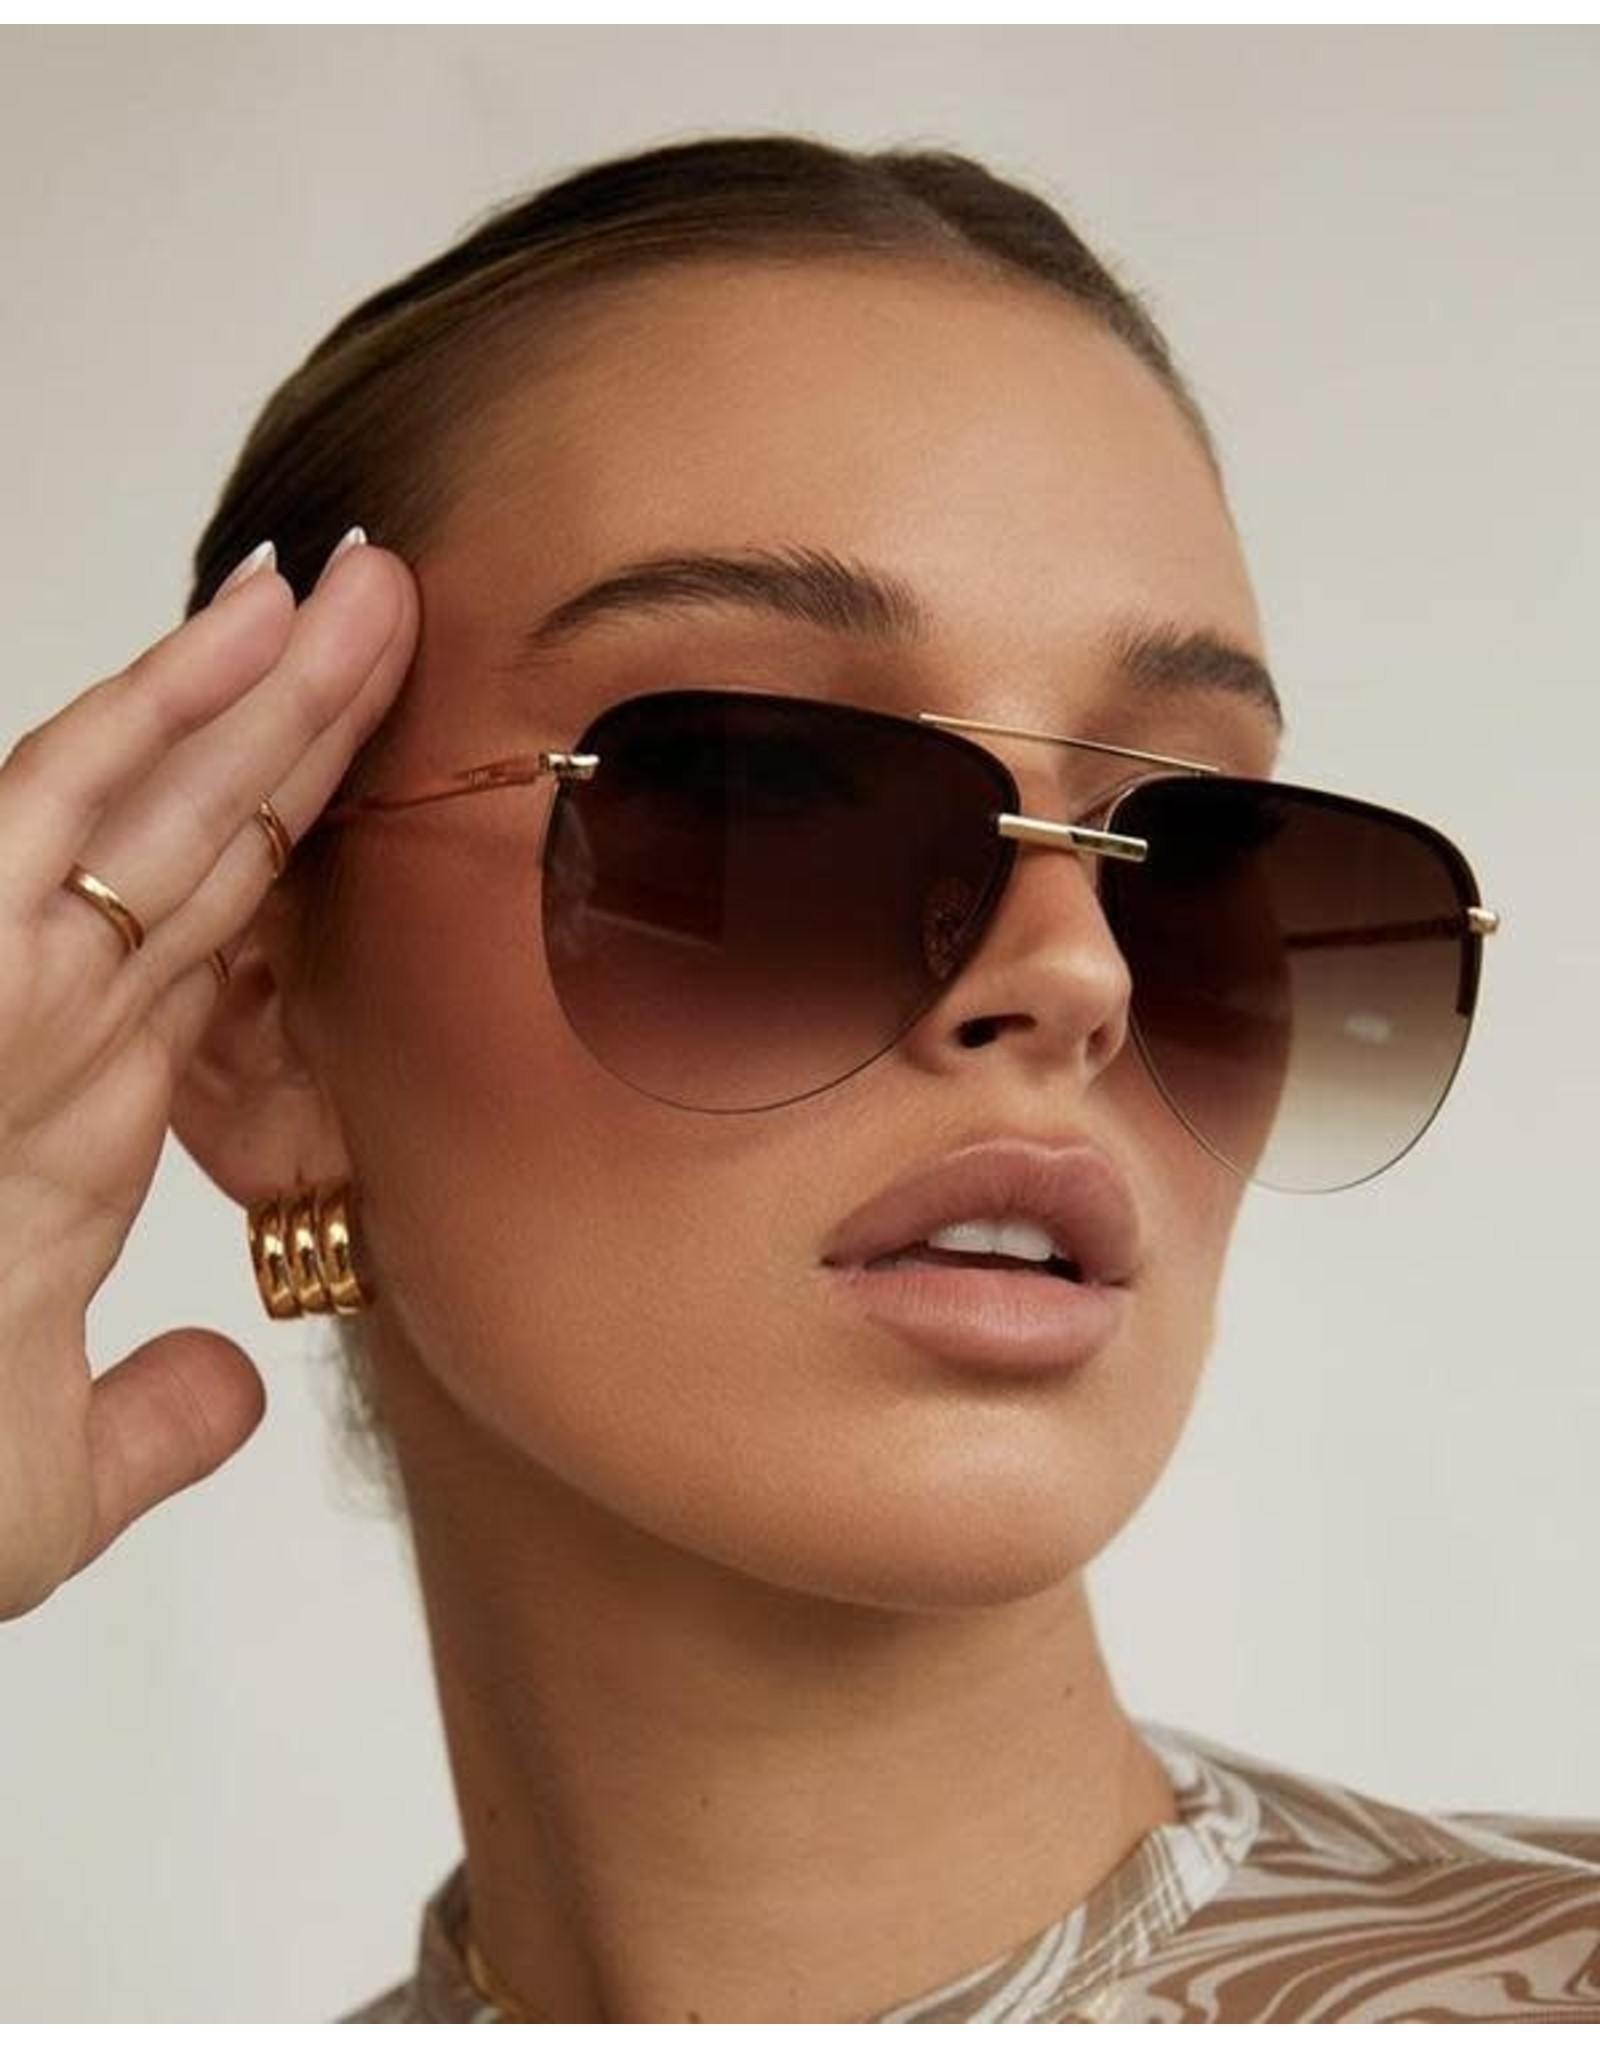 Billini The Hosk Sunglasses